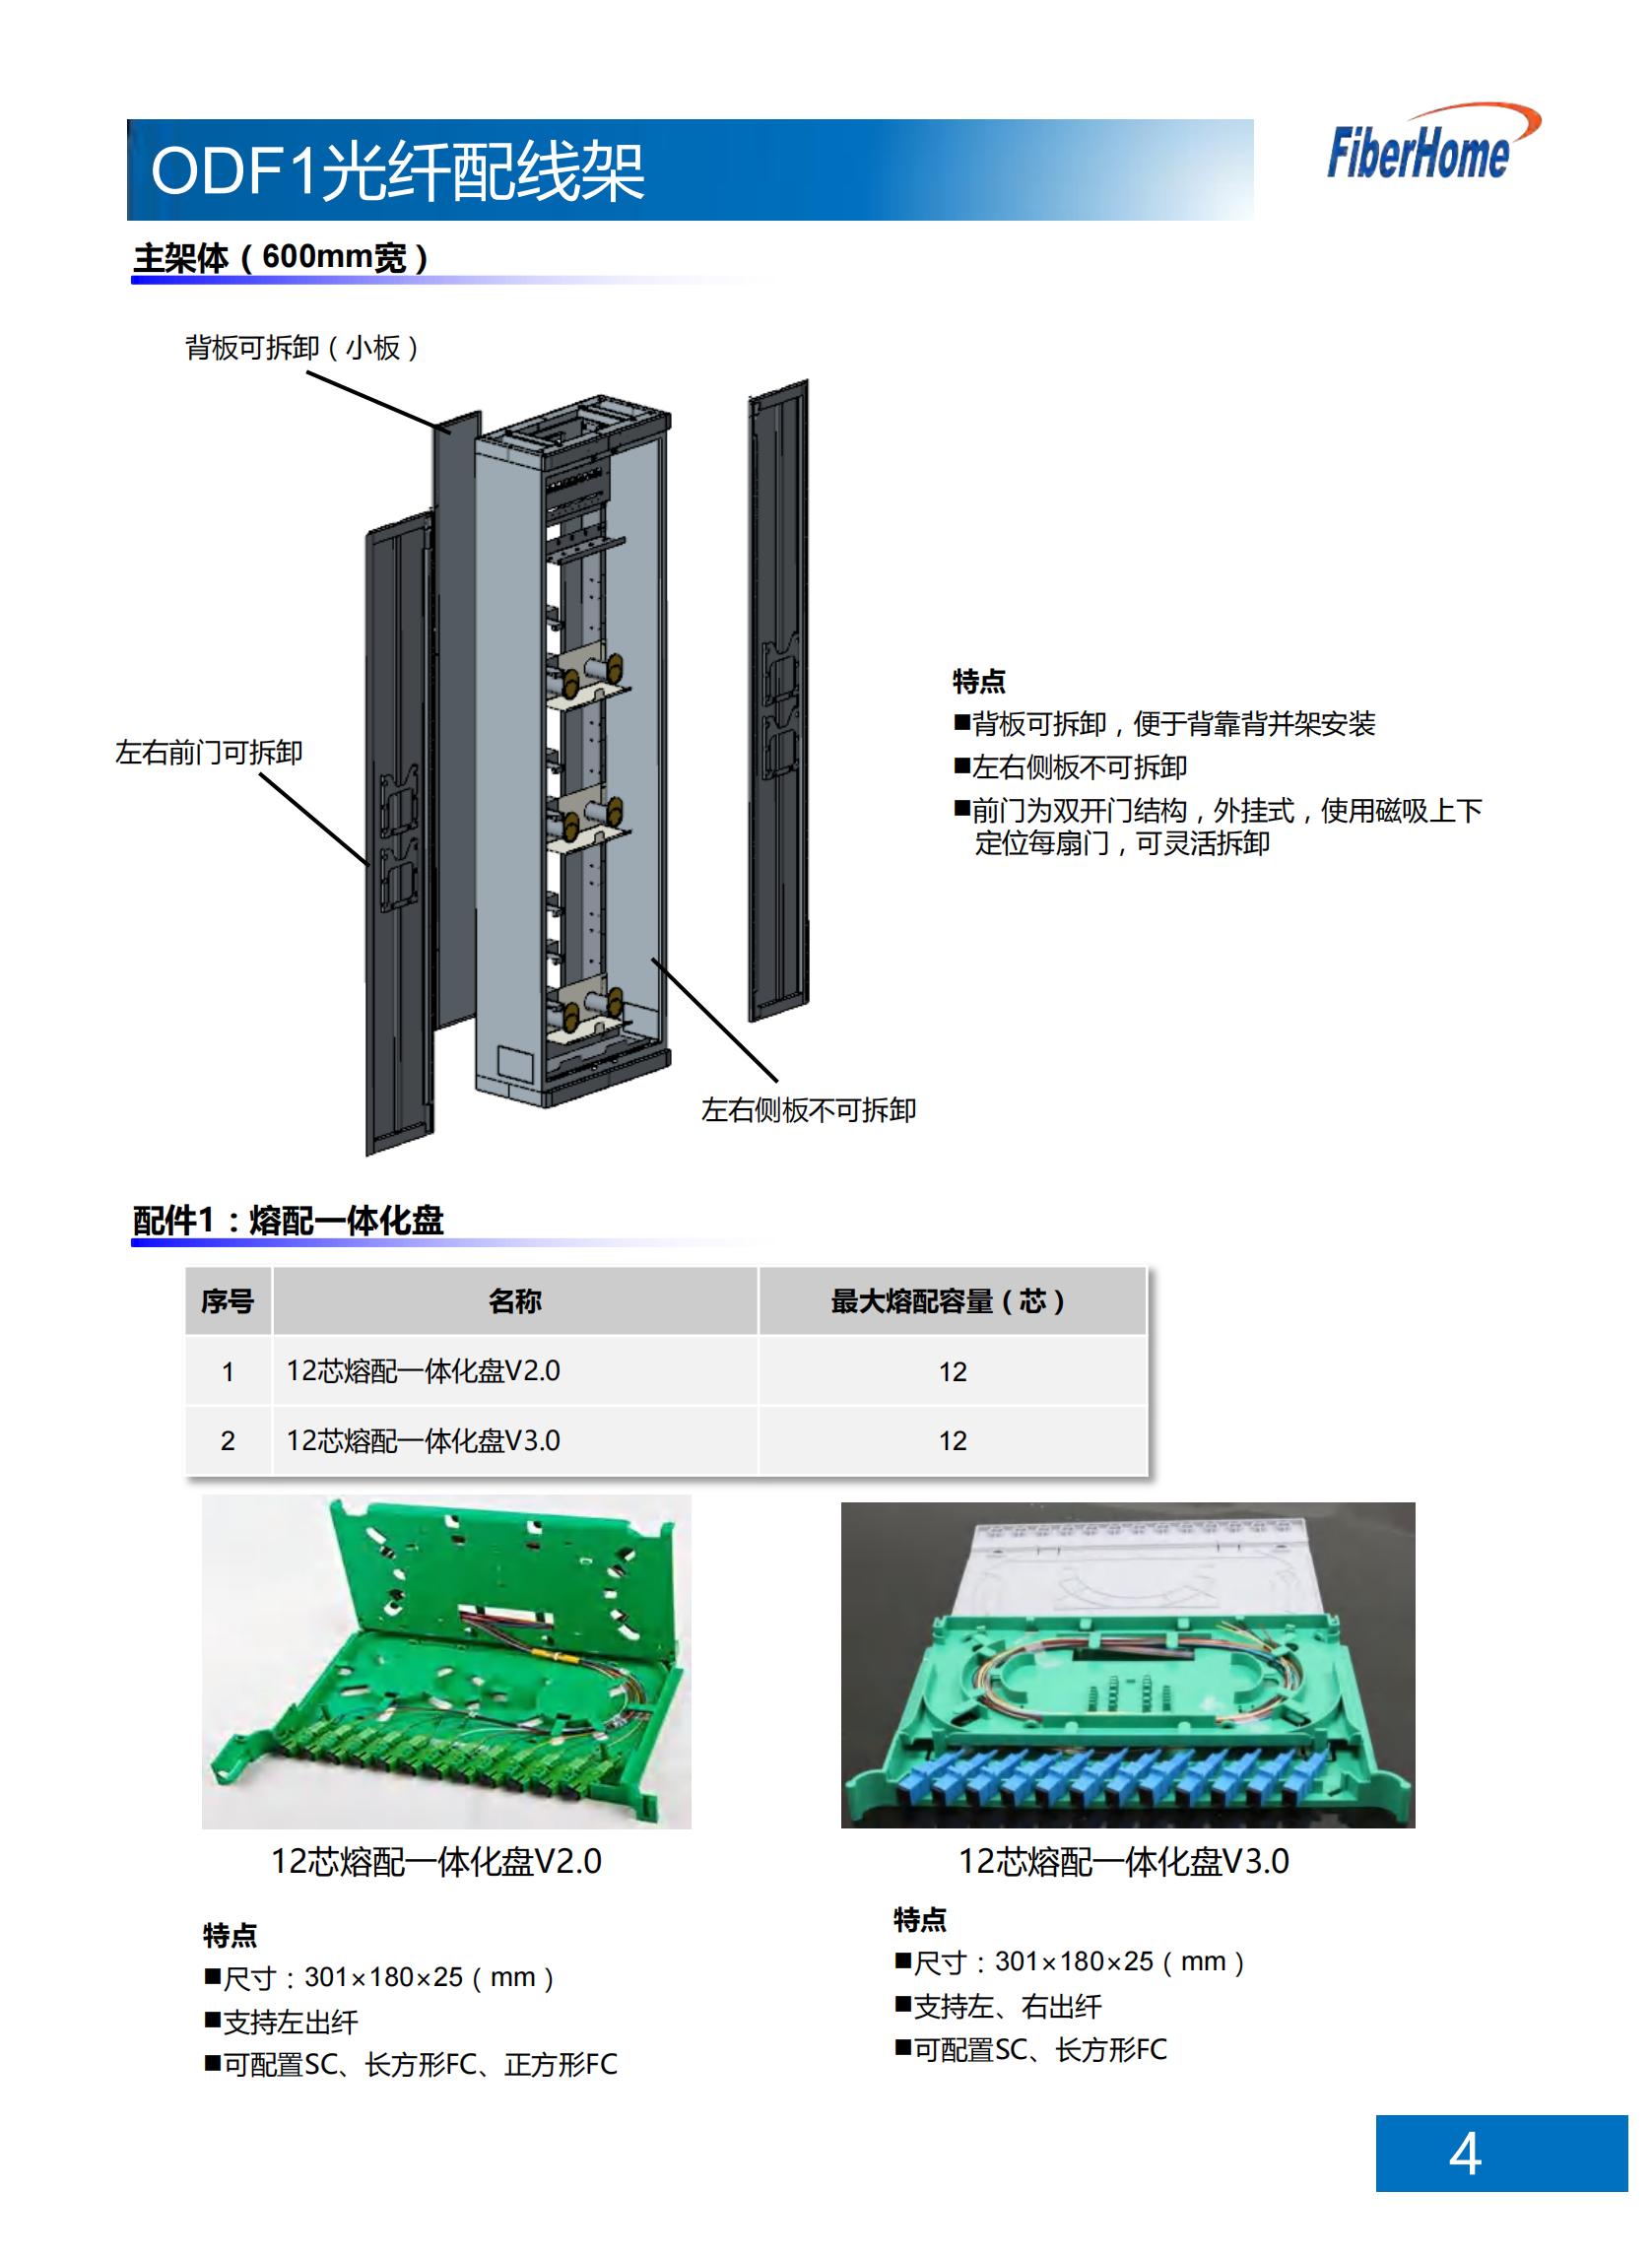 ODF101-576-A4 ODF光纤配线架 （576芯落地式 无子框型 不带熔纤盘 带储纤单元）